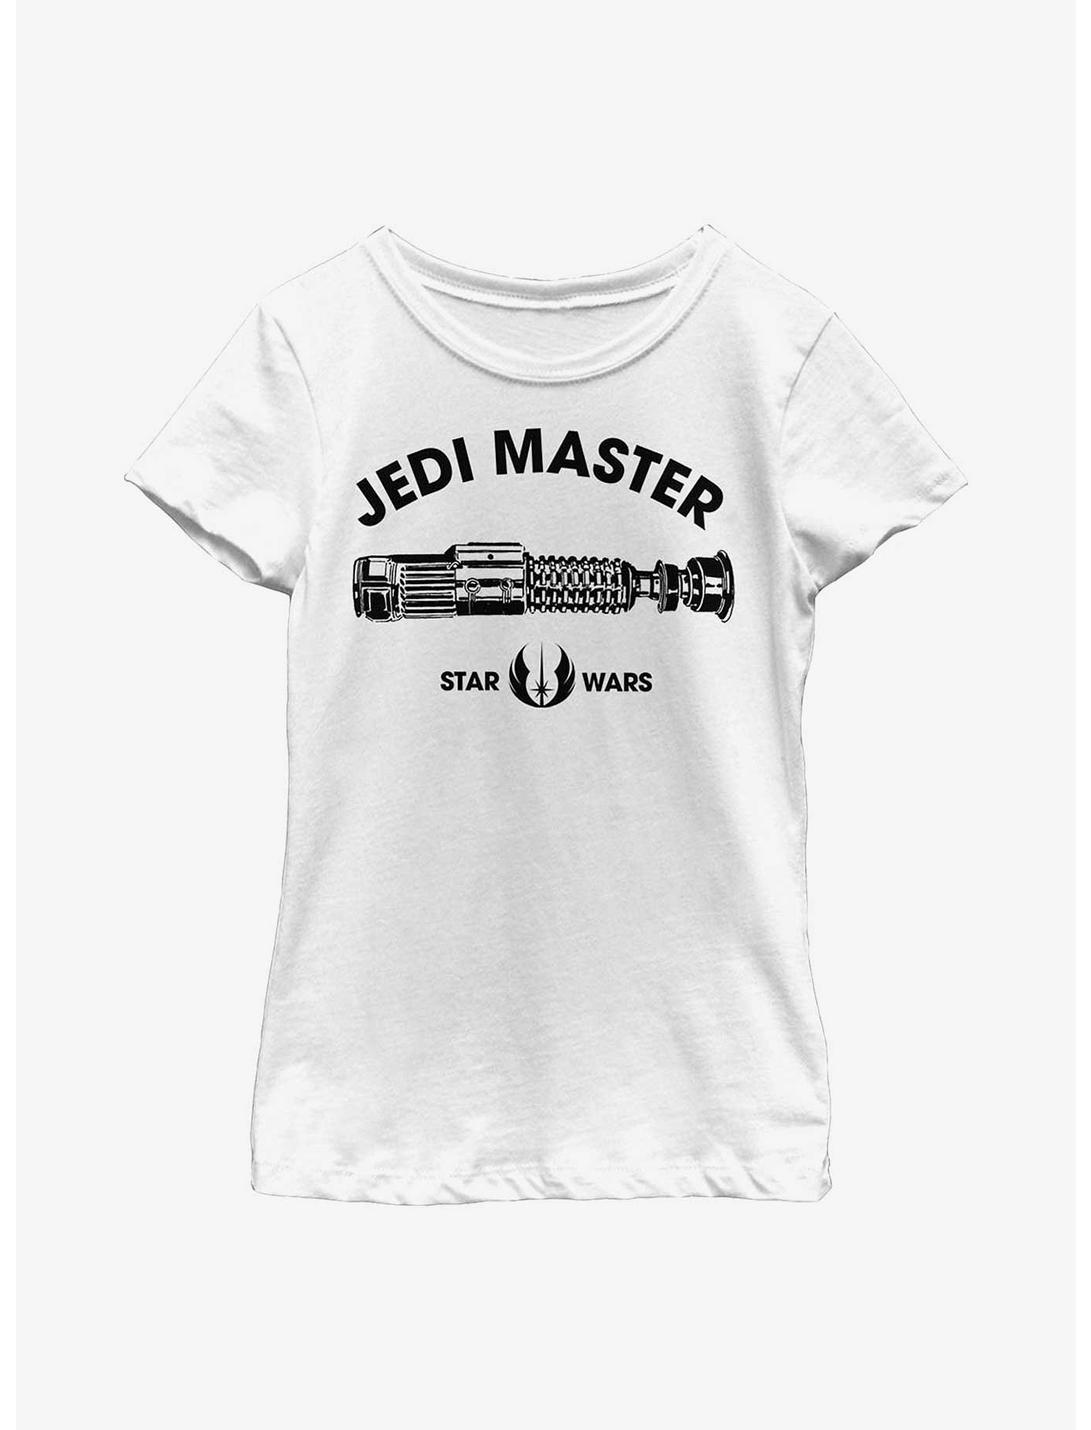 Star Wars Jedi Master Youth Girls T-Shirt, WHITE, hi-res